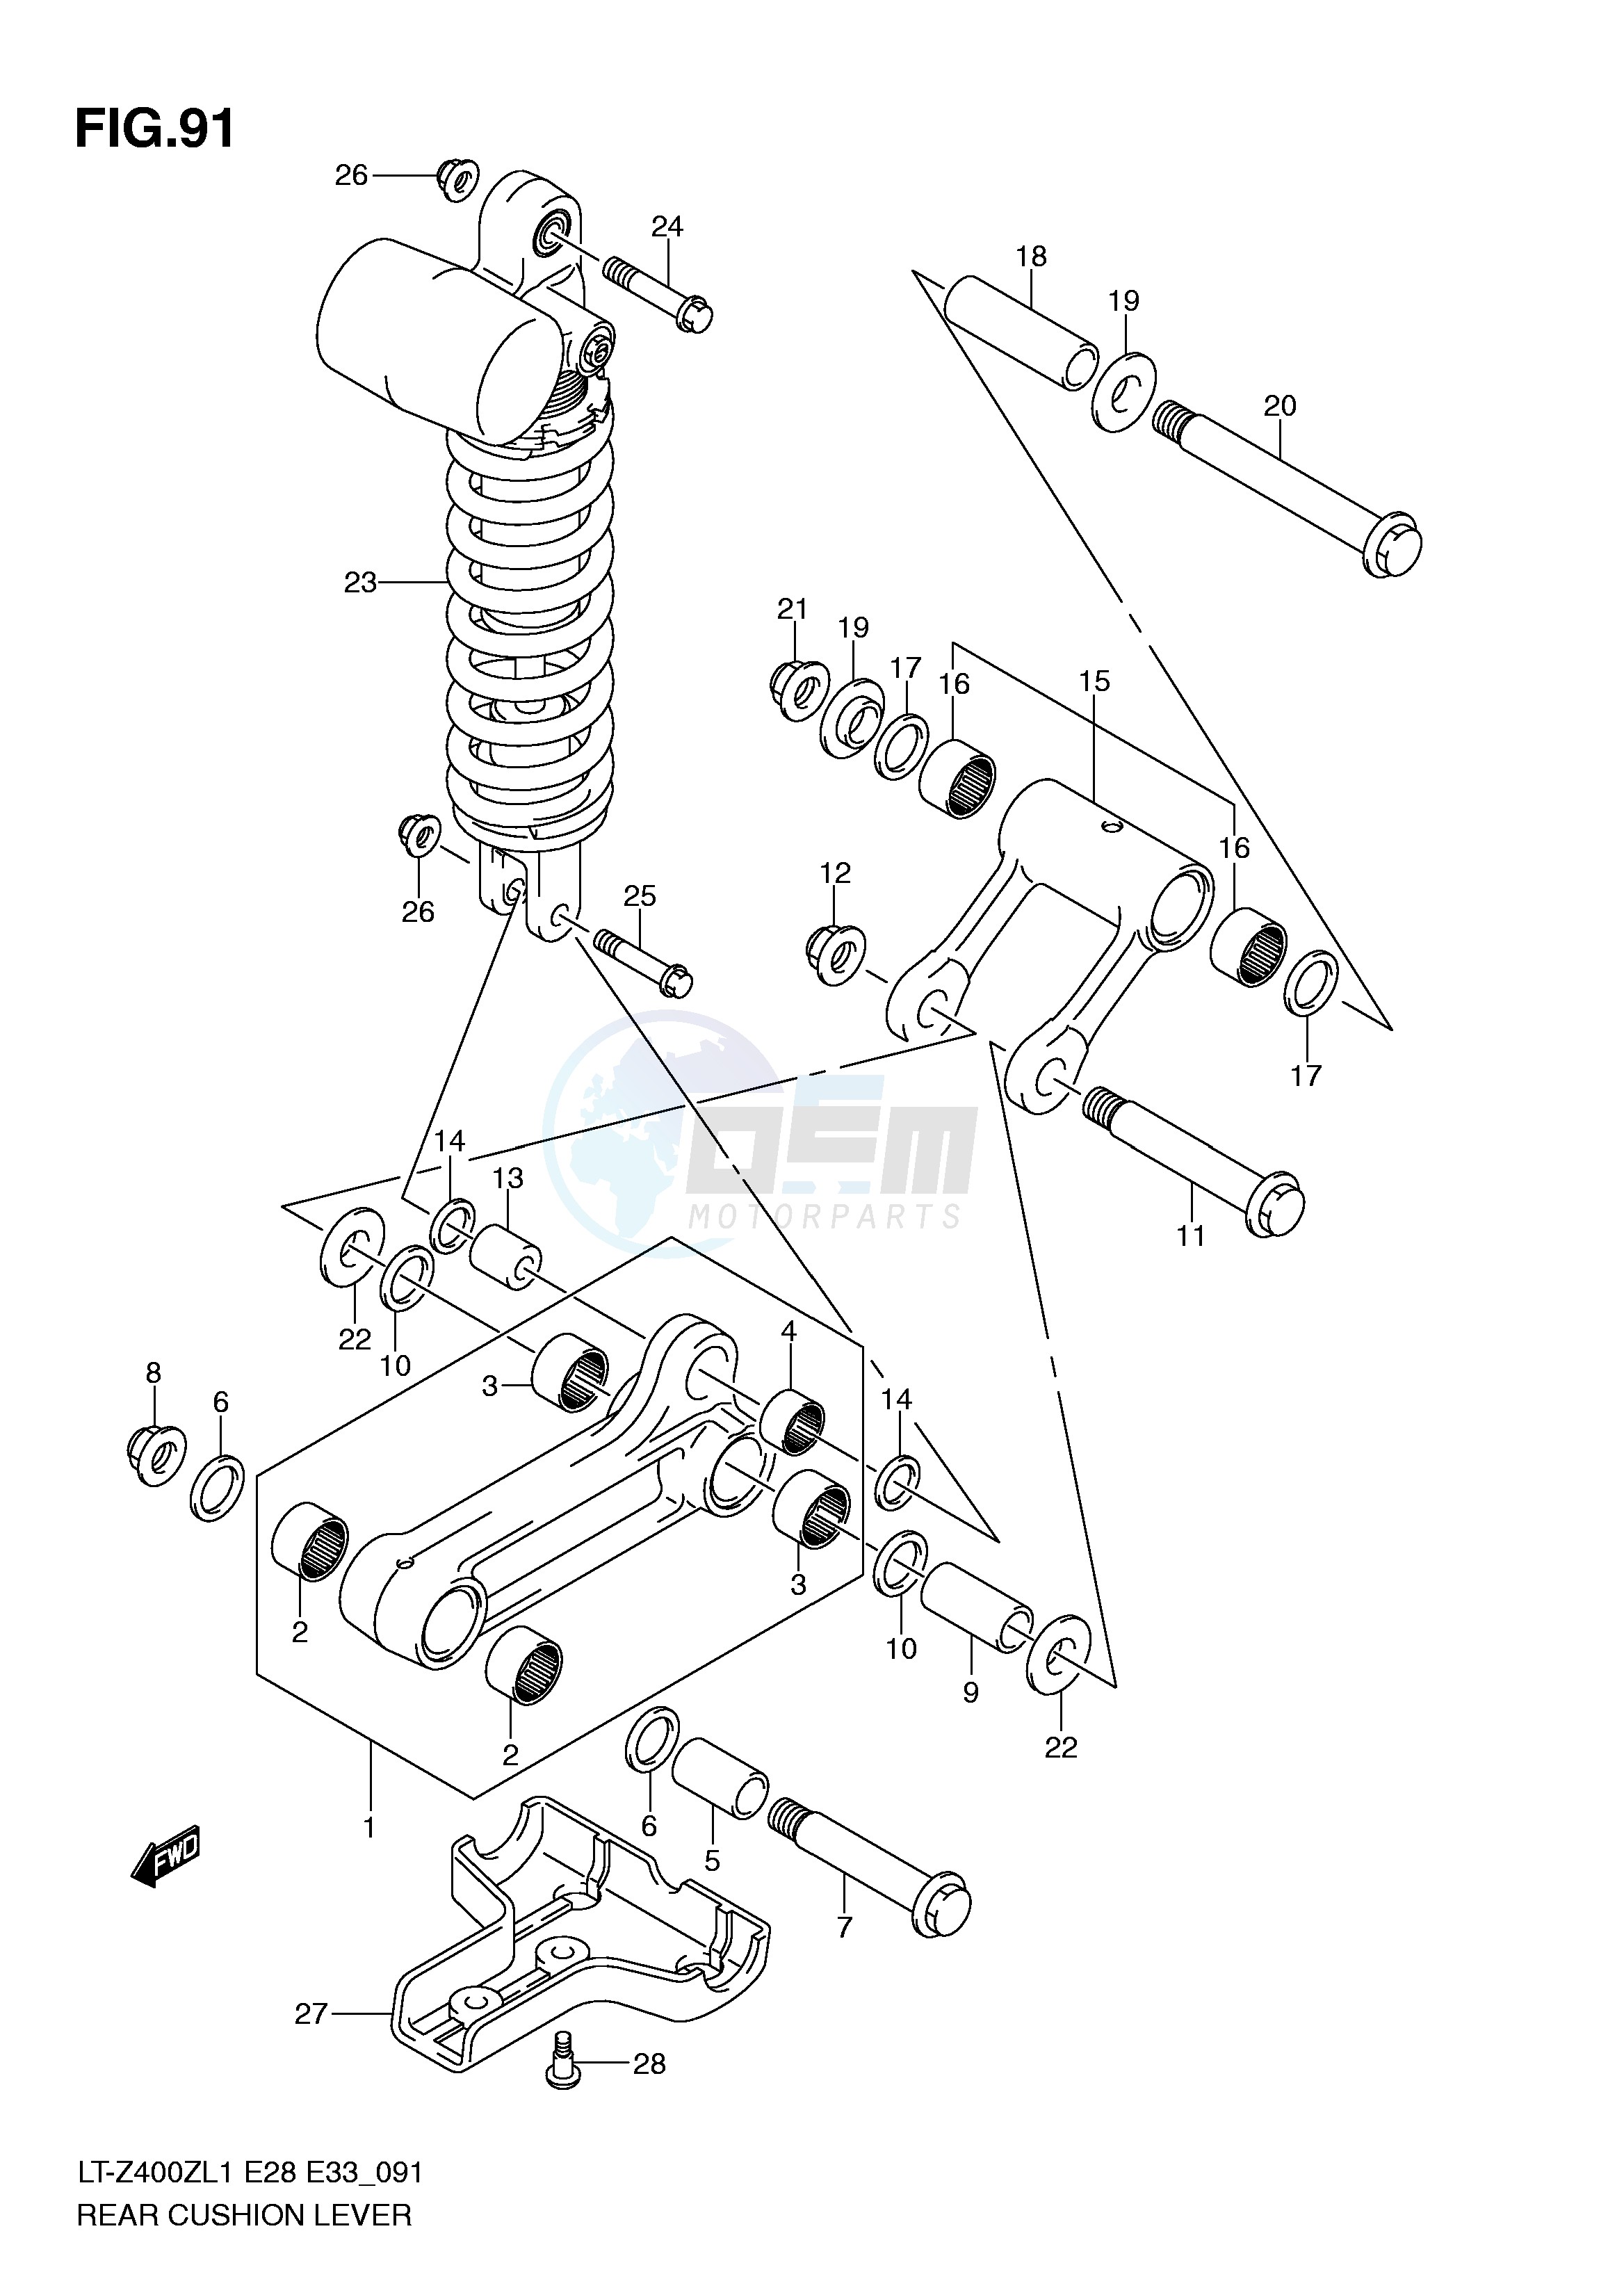 REAR CUSHION LEVER (LT-Z400ZL1 E28) blueprint